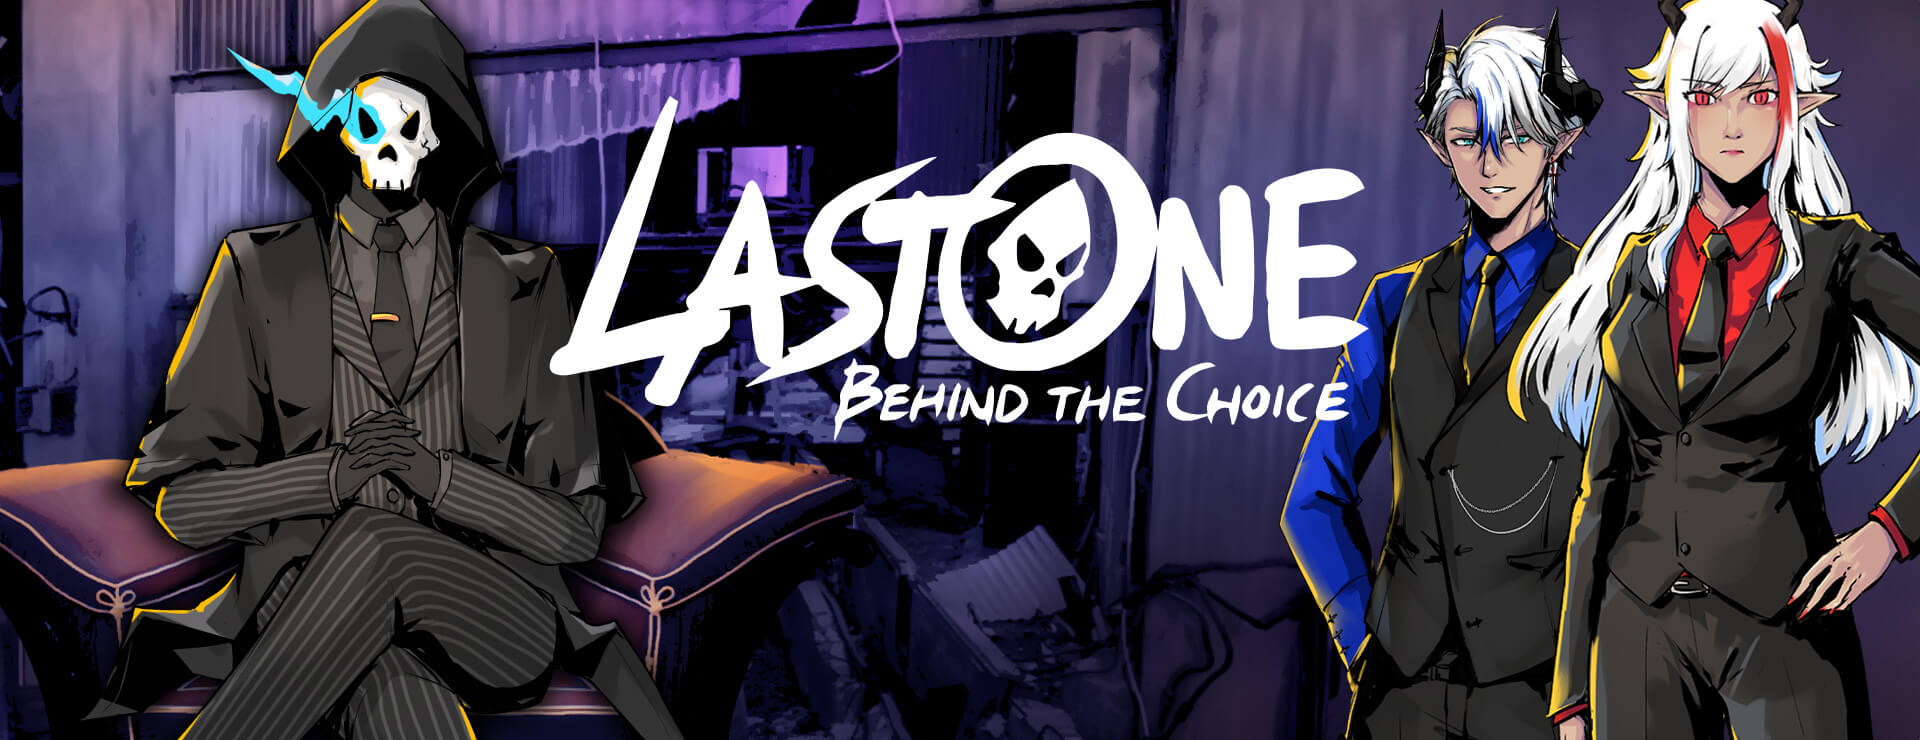 Lastone: Behind the Choice - Novela Visual Juego